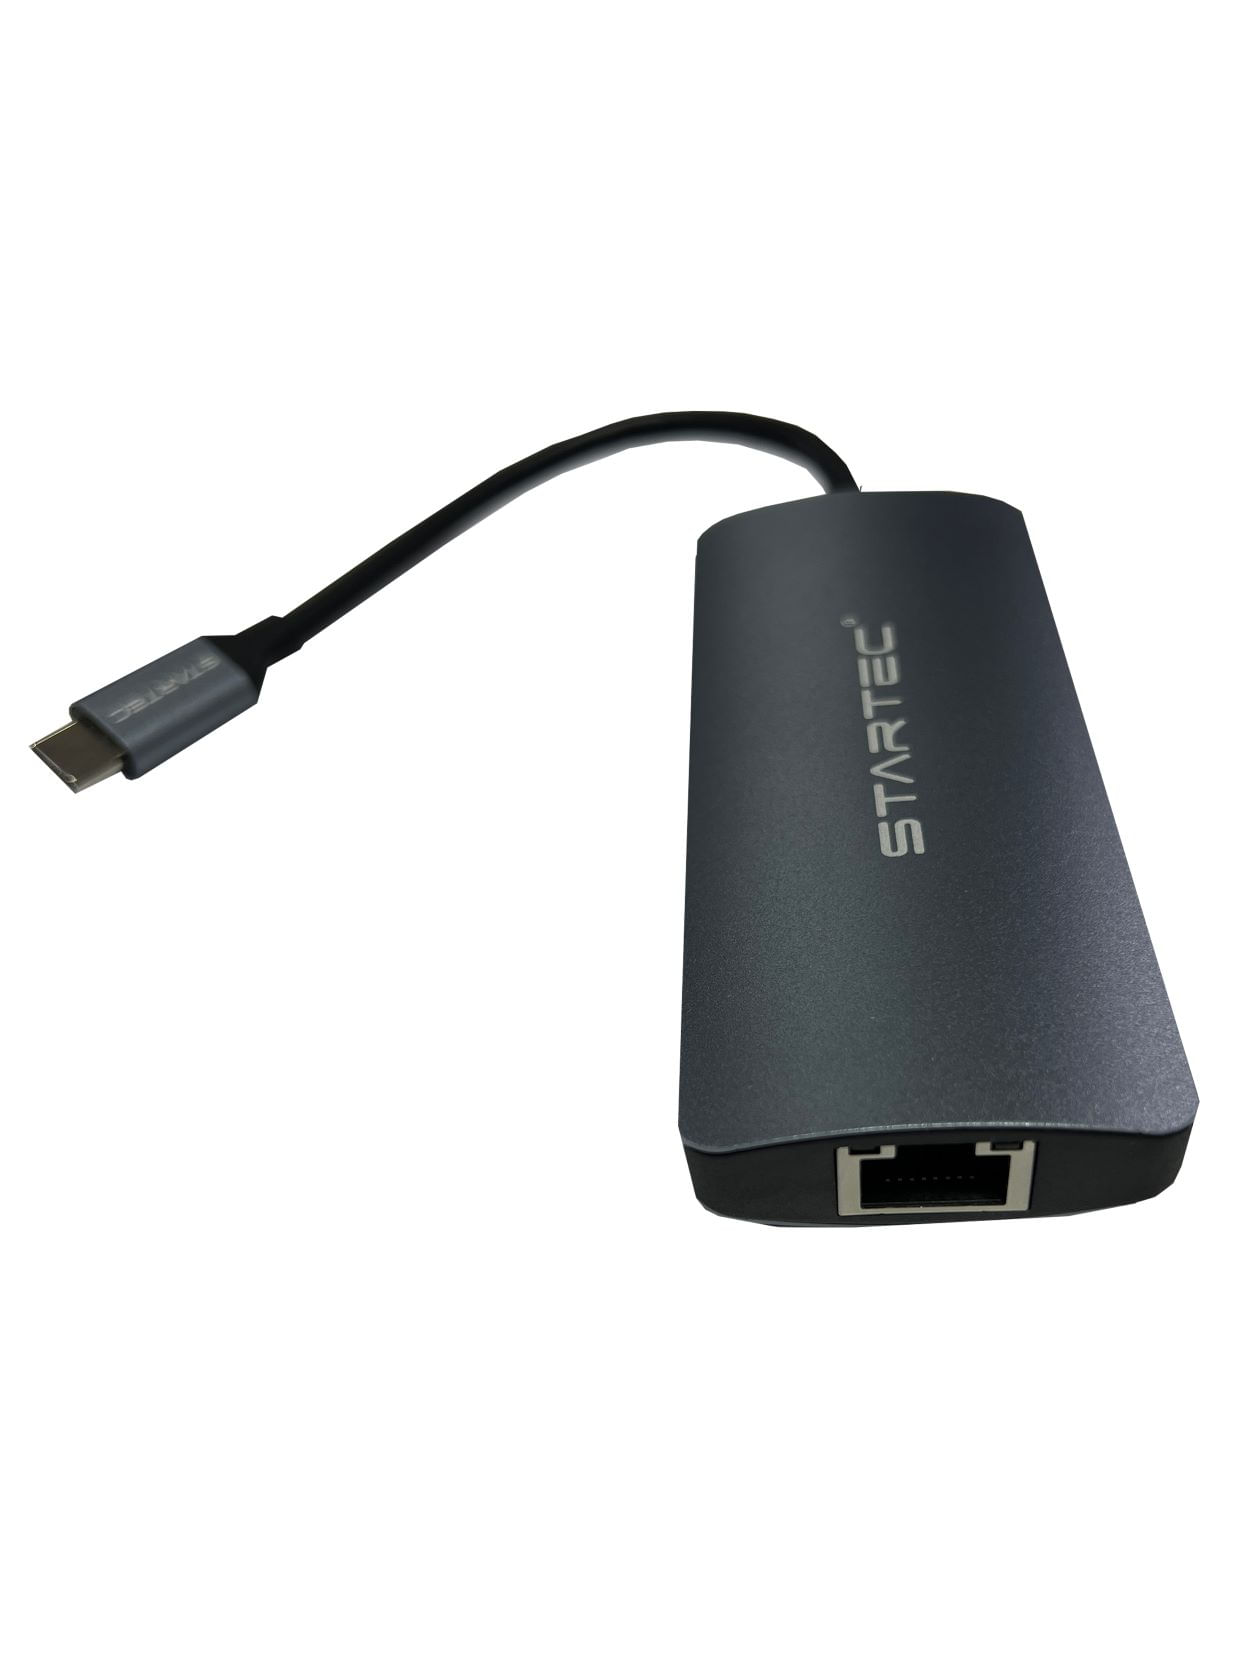 Adaptador Hub Star Tec ST-HU-19 con 4 puertos USB 3.0